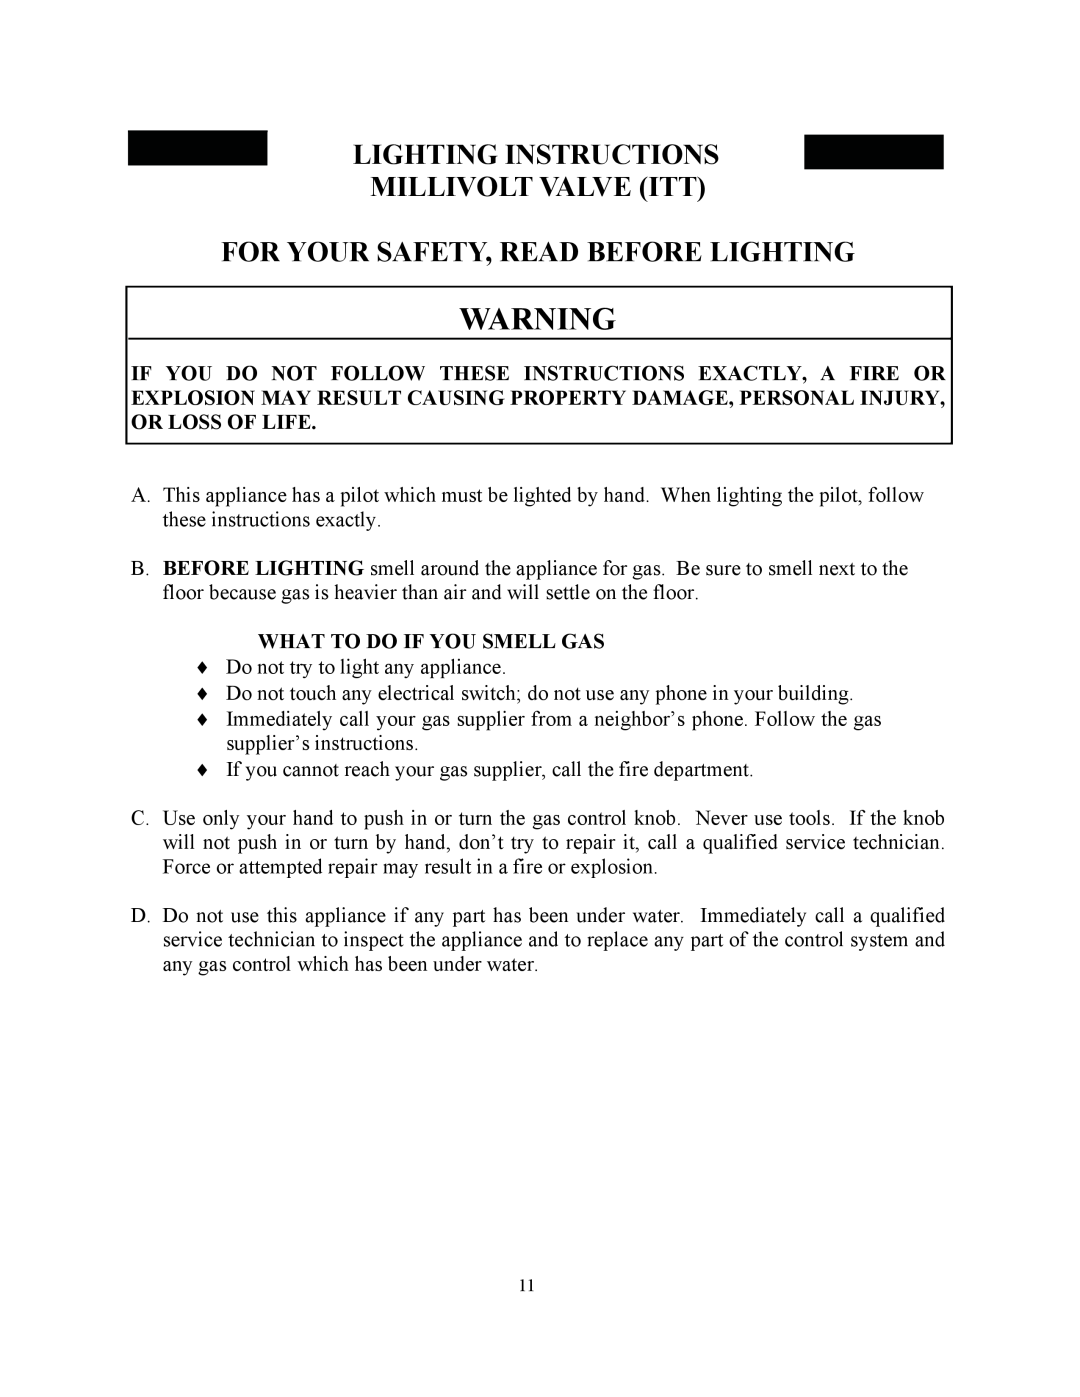 New Buck Corporation 34 manual Lighting Instructions Millivolt Valve Itt, For Your Safety, Read Before Lighting 